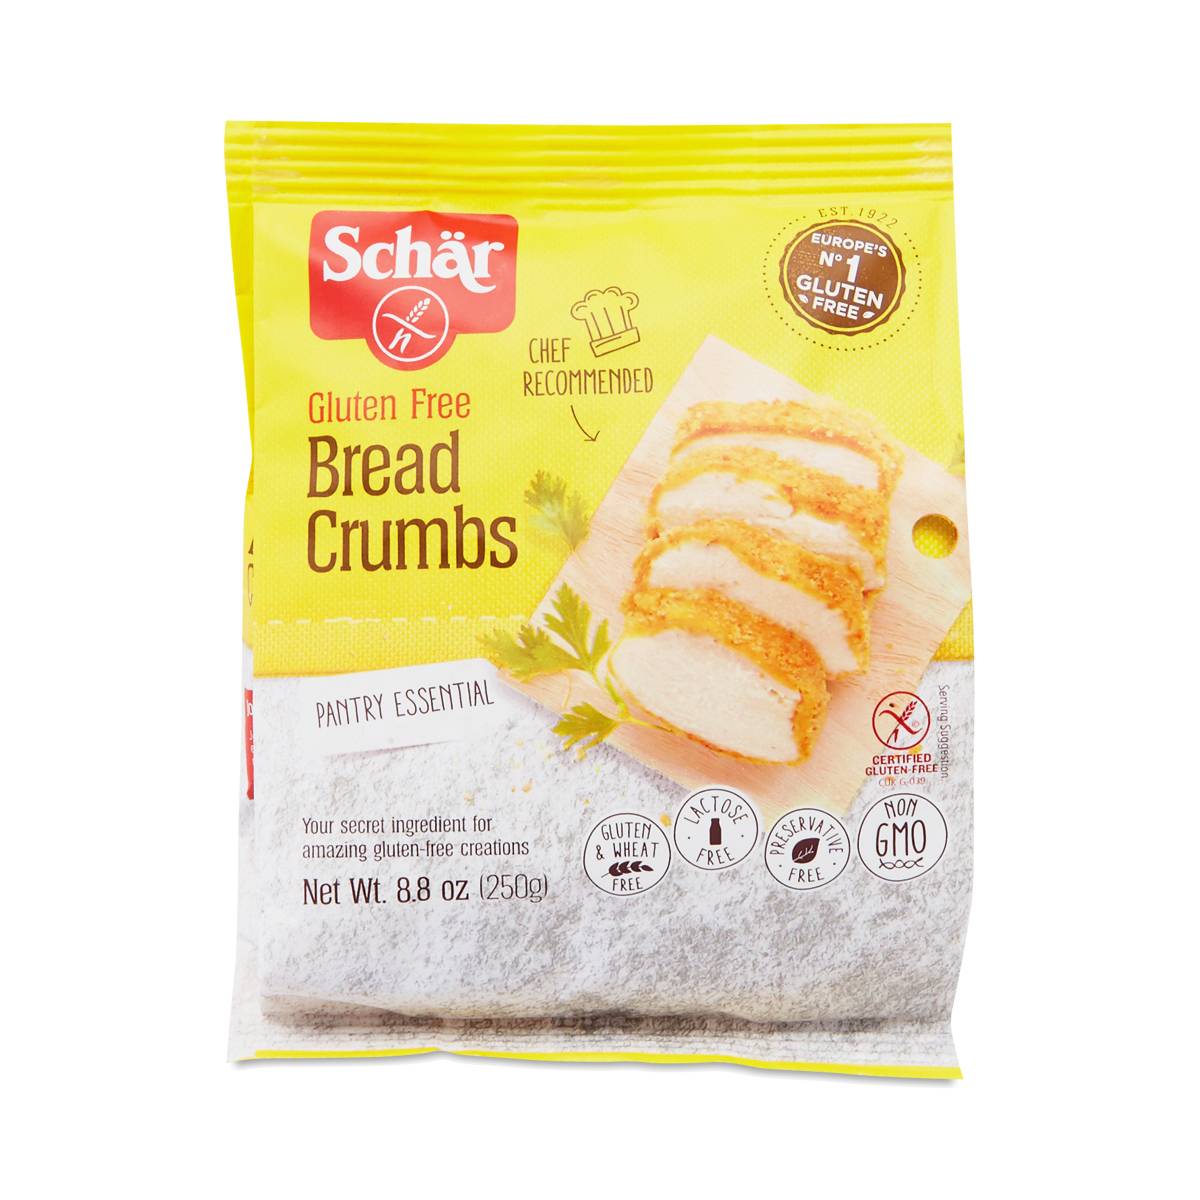 Gluten Free Bread Crumbs by Schar